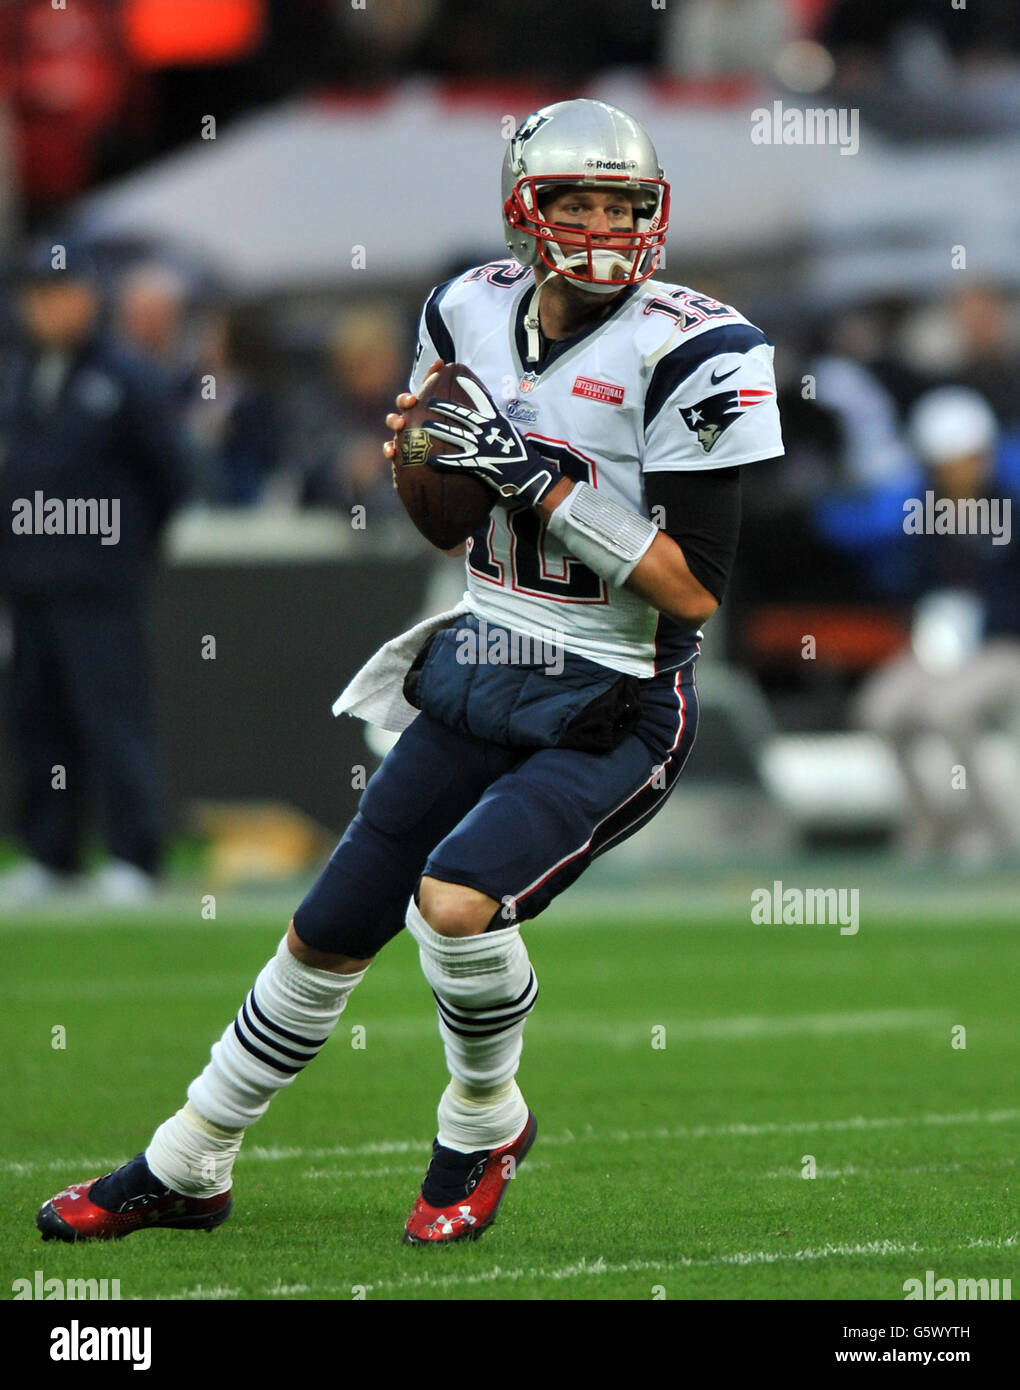 American Football - NFL International Series 2012 - St. Louis Rams gegen New England Patriots - Wembley Stadium. Tom Brady, New England Patriots Quarter Back Stockfoto